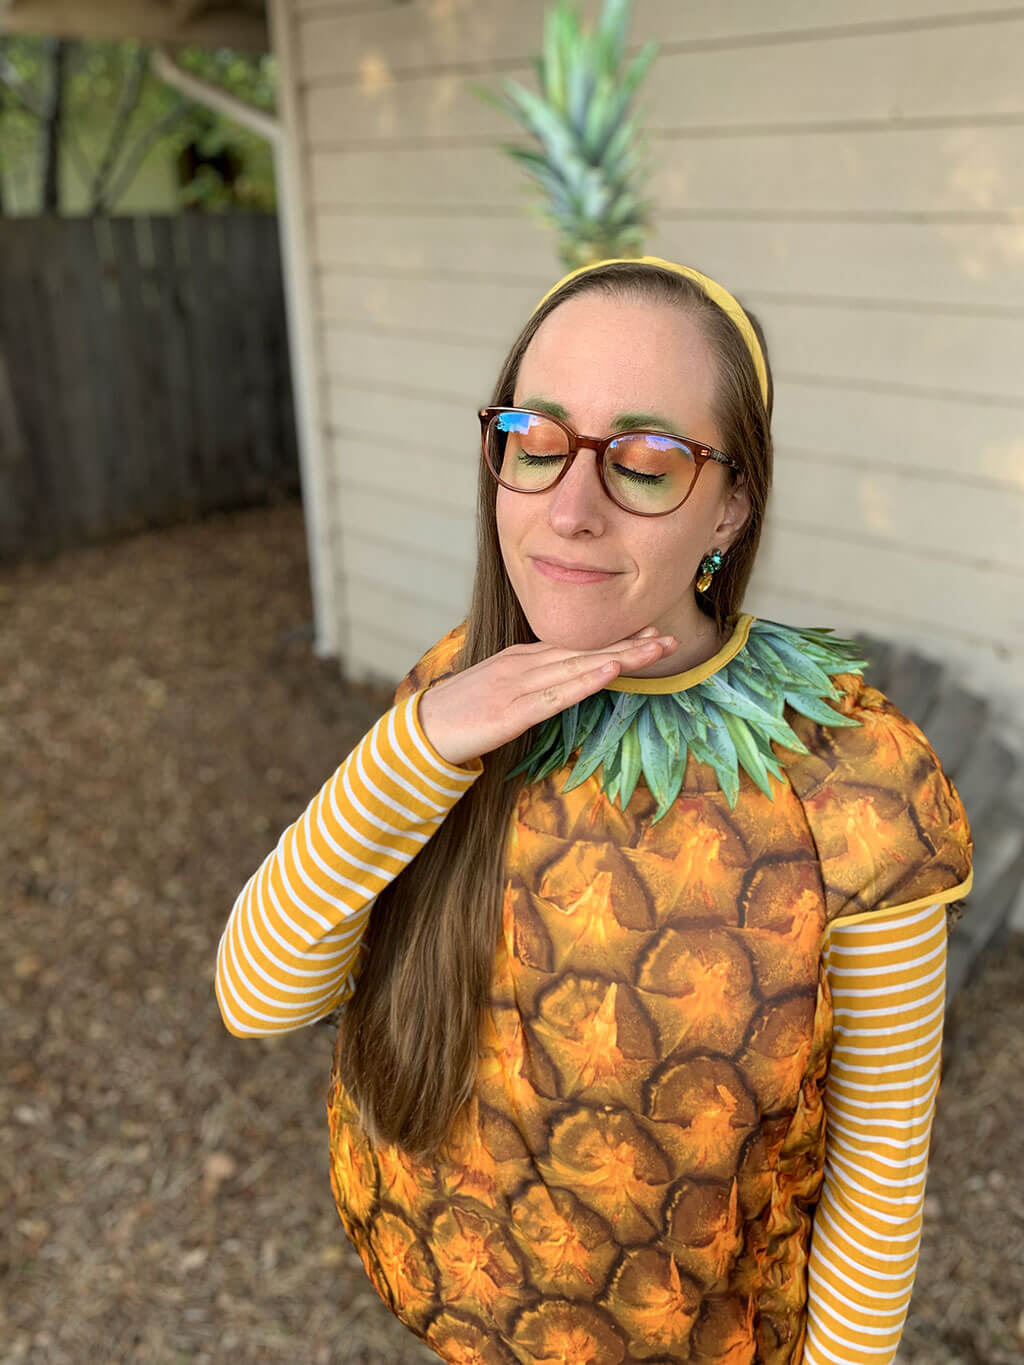 drive-swim-fly-halloween-pineapple-costume-2020-yellow-striped-shirt